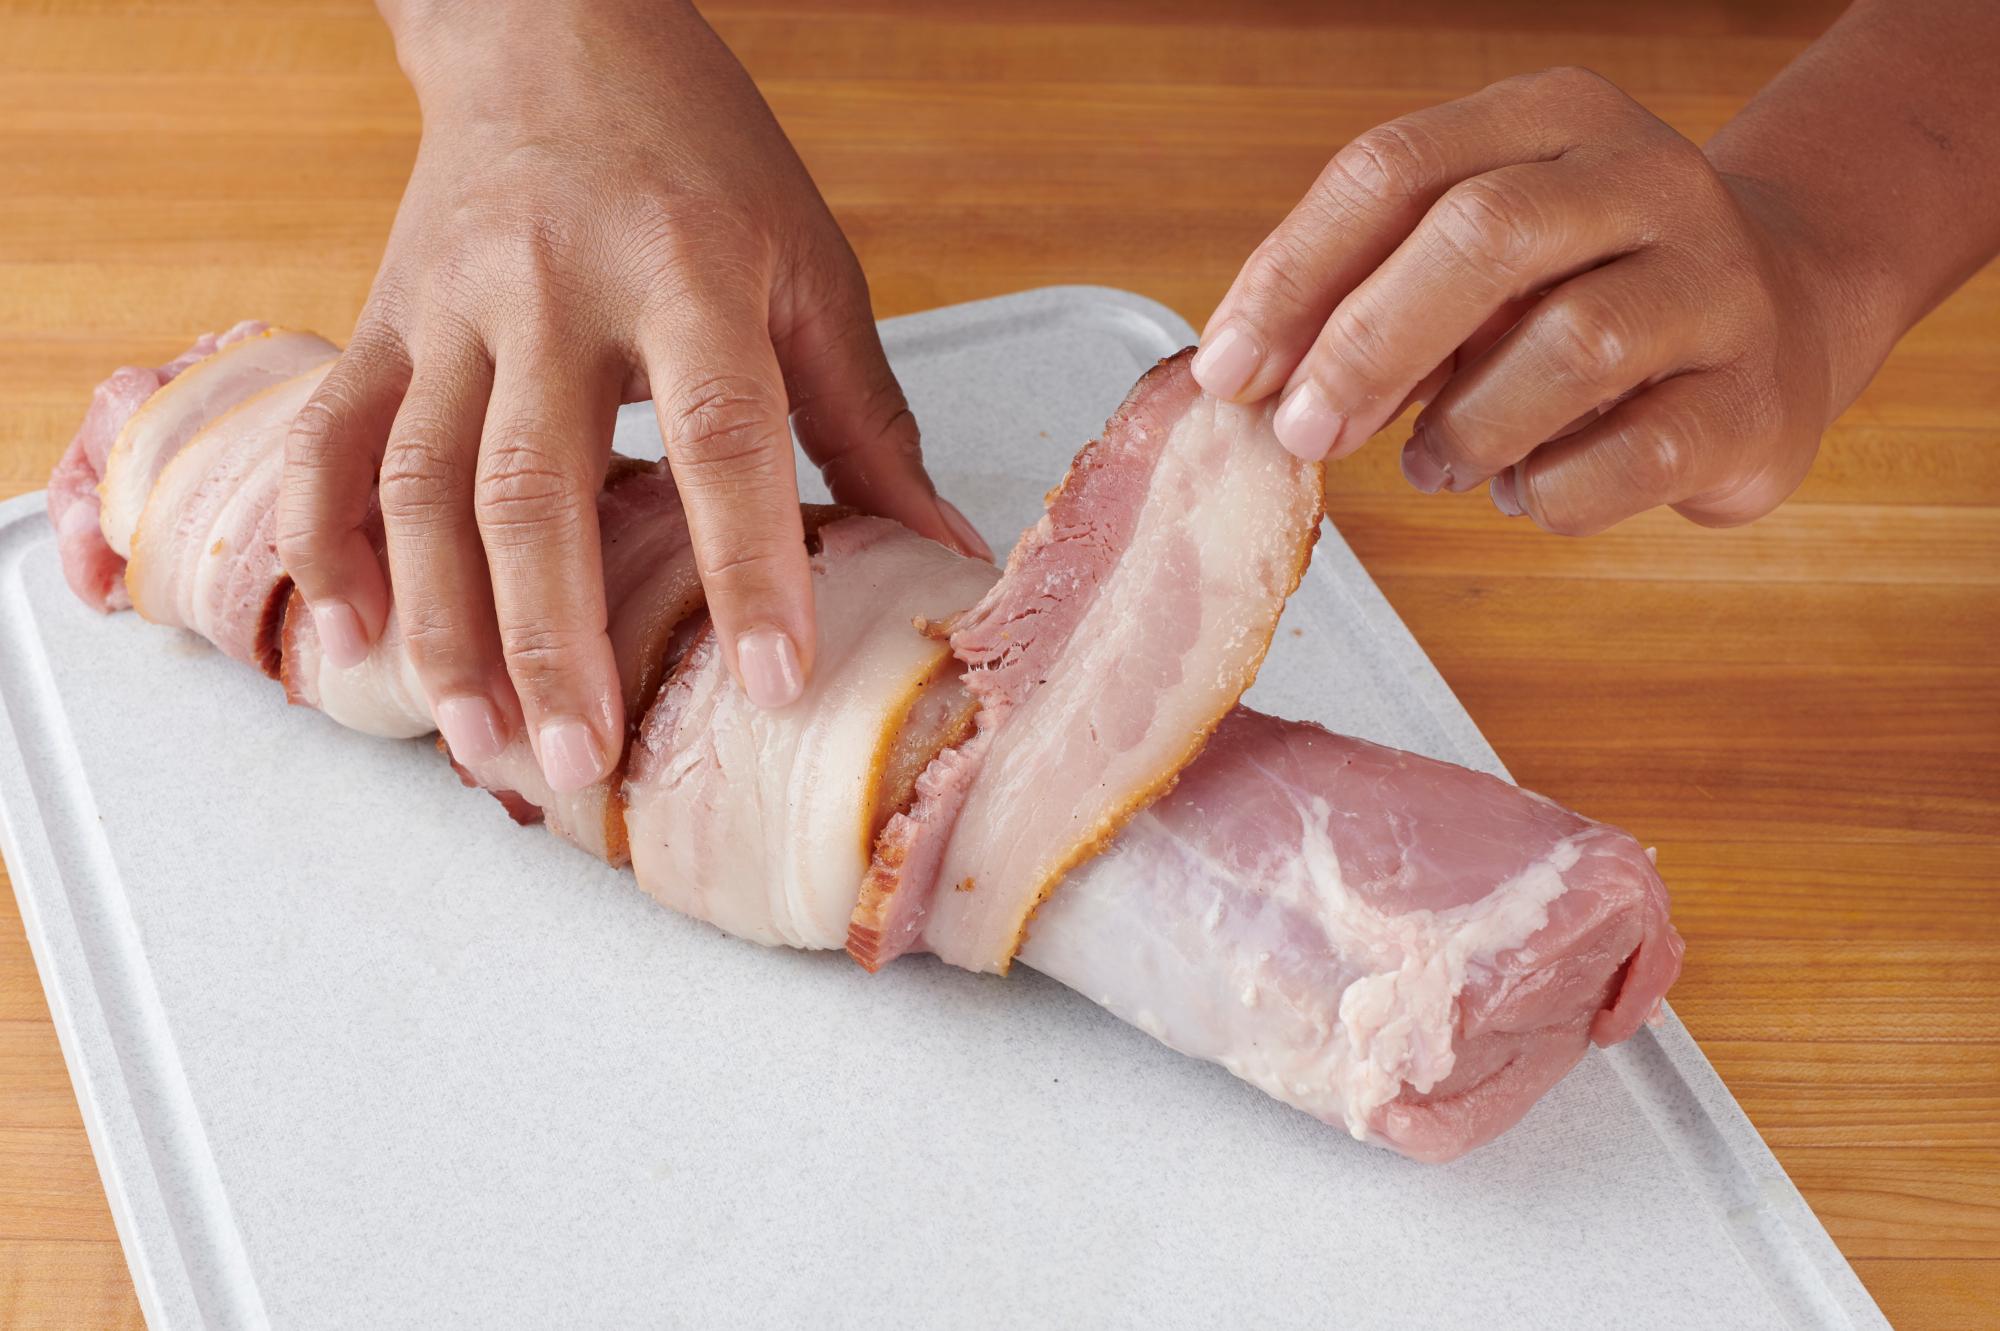 Wrapping the tenderloin with bacon.